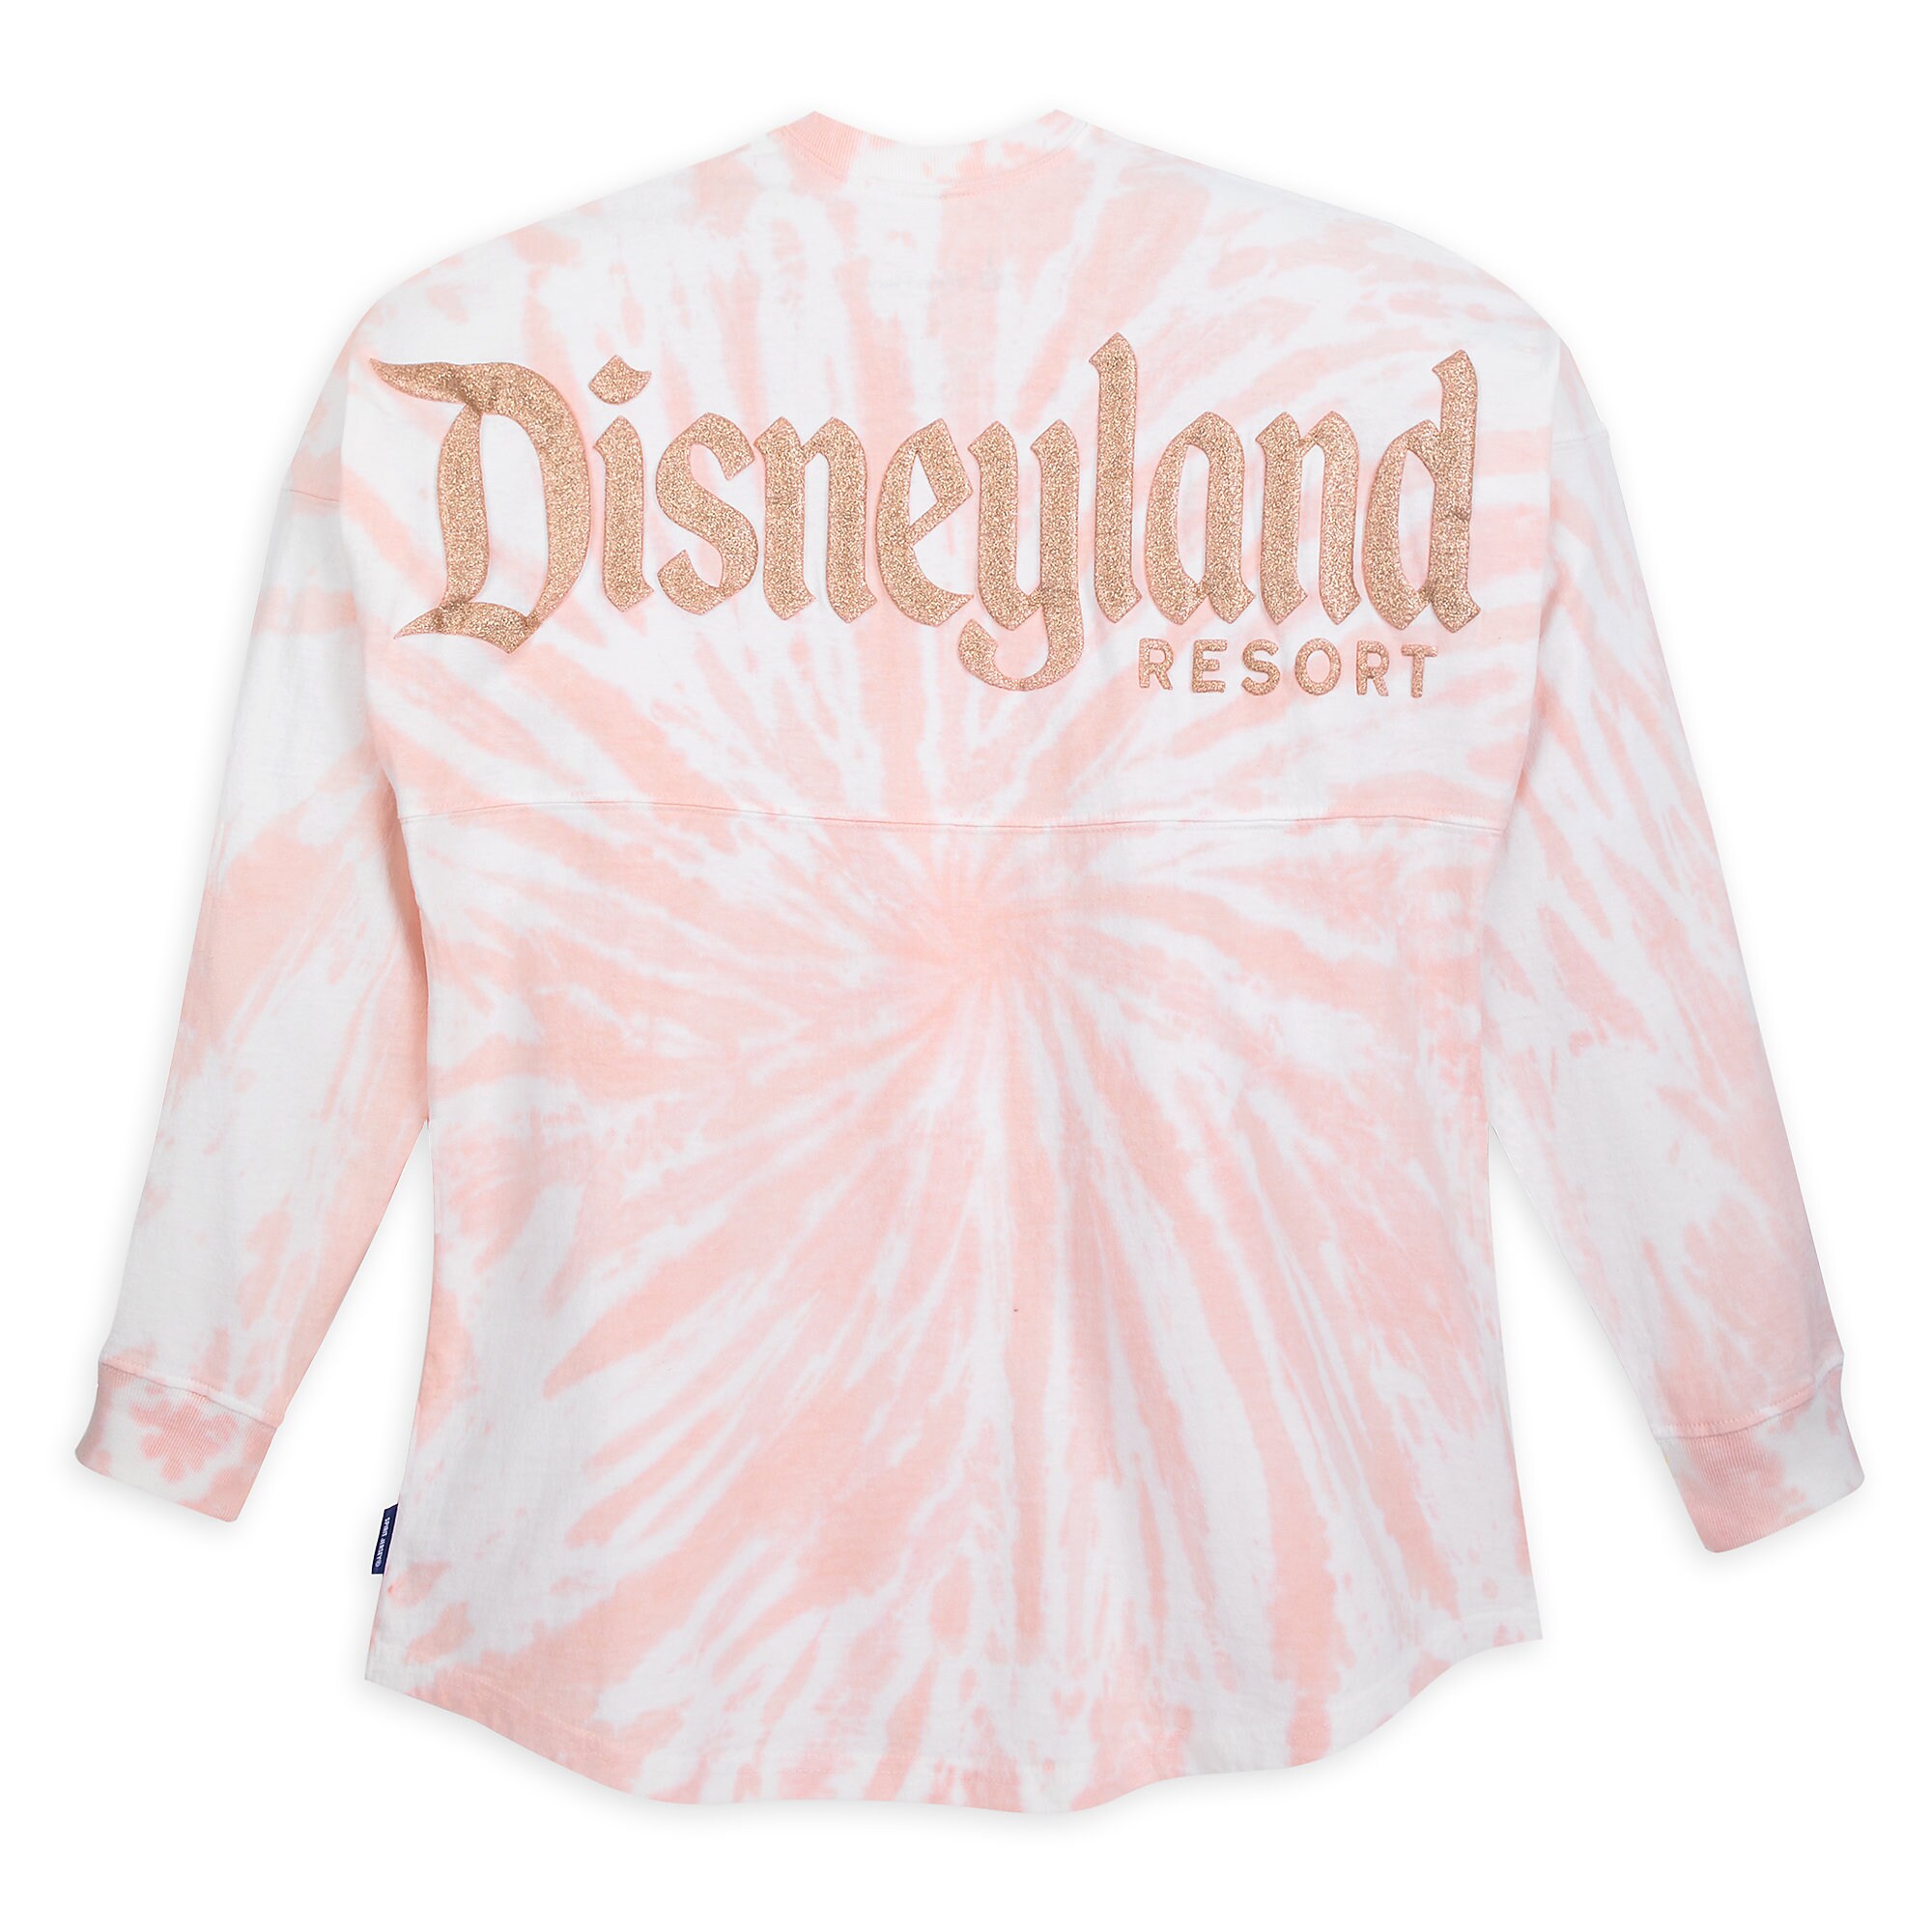 Disneyland Spirit Jersey for Adults - Tie-Dye Briar Rose Gold